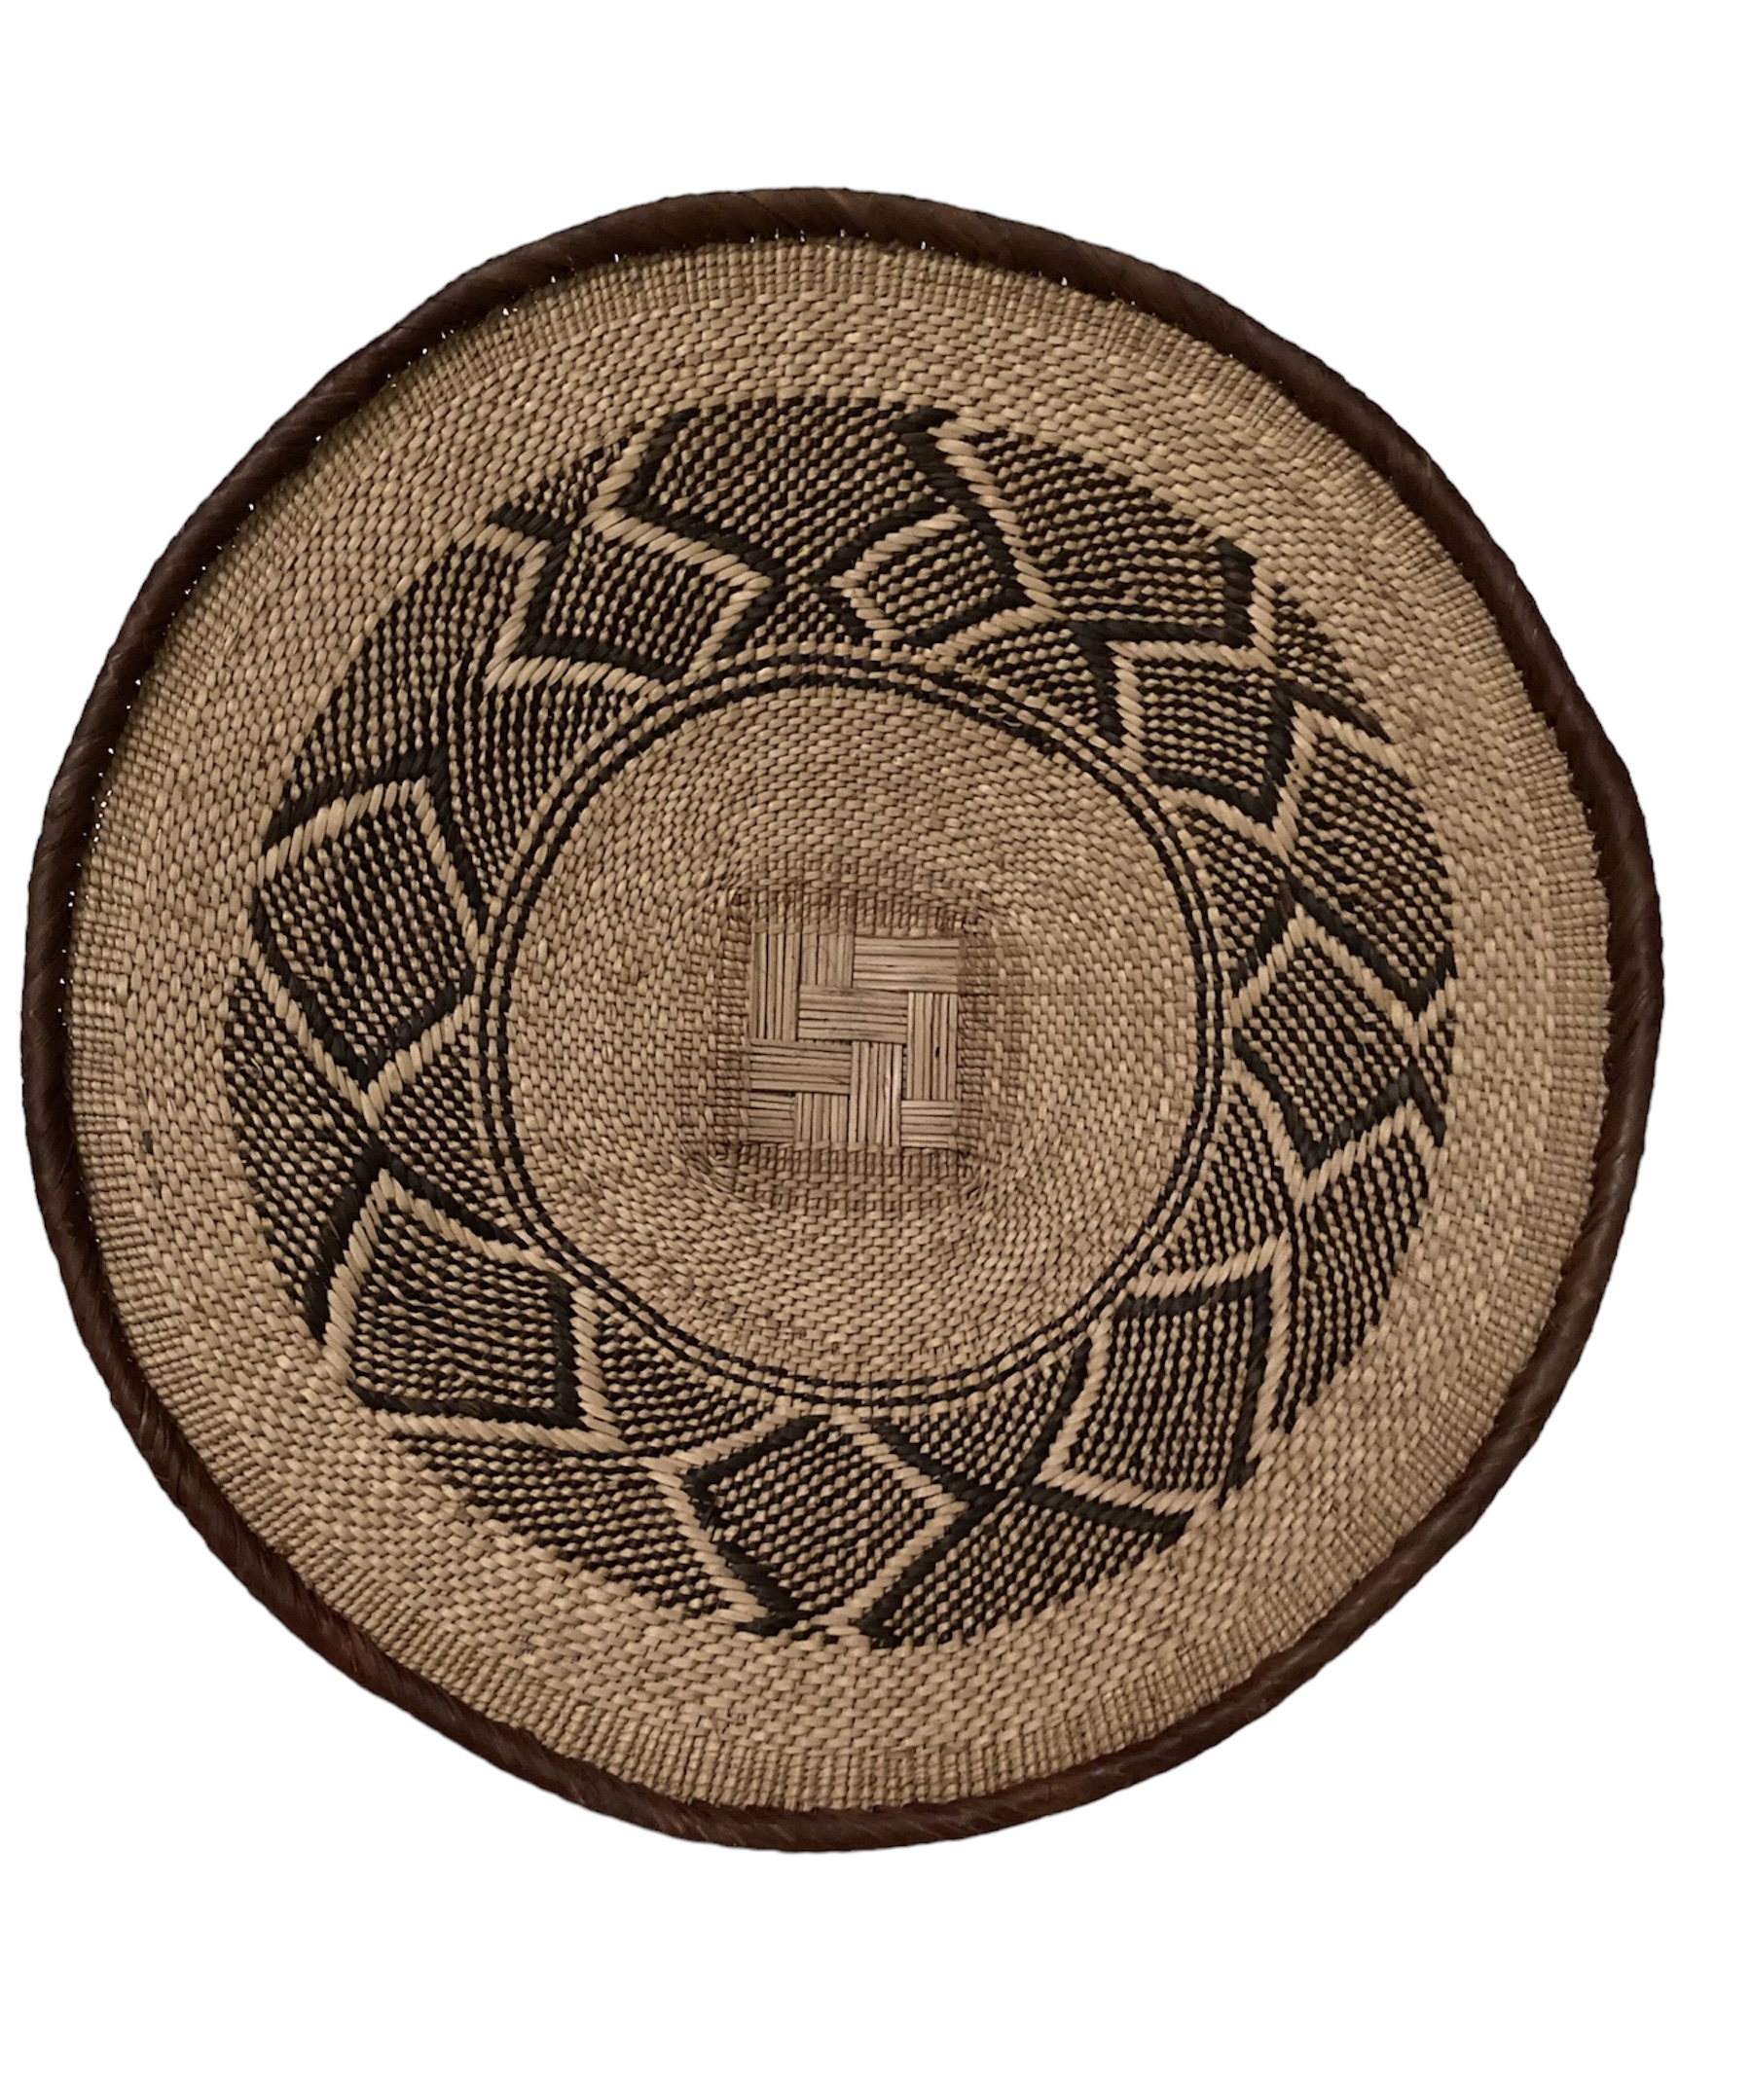 Tonga Basket from Zimbabwe - Design #022 - 19\" dia.